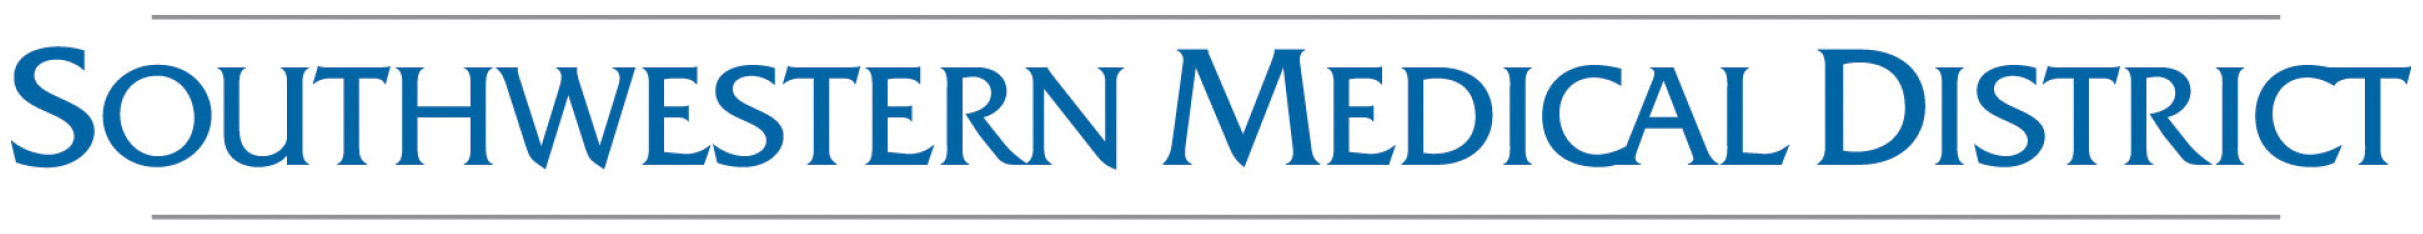 Southwestern Medical District Logo Image